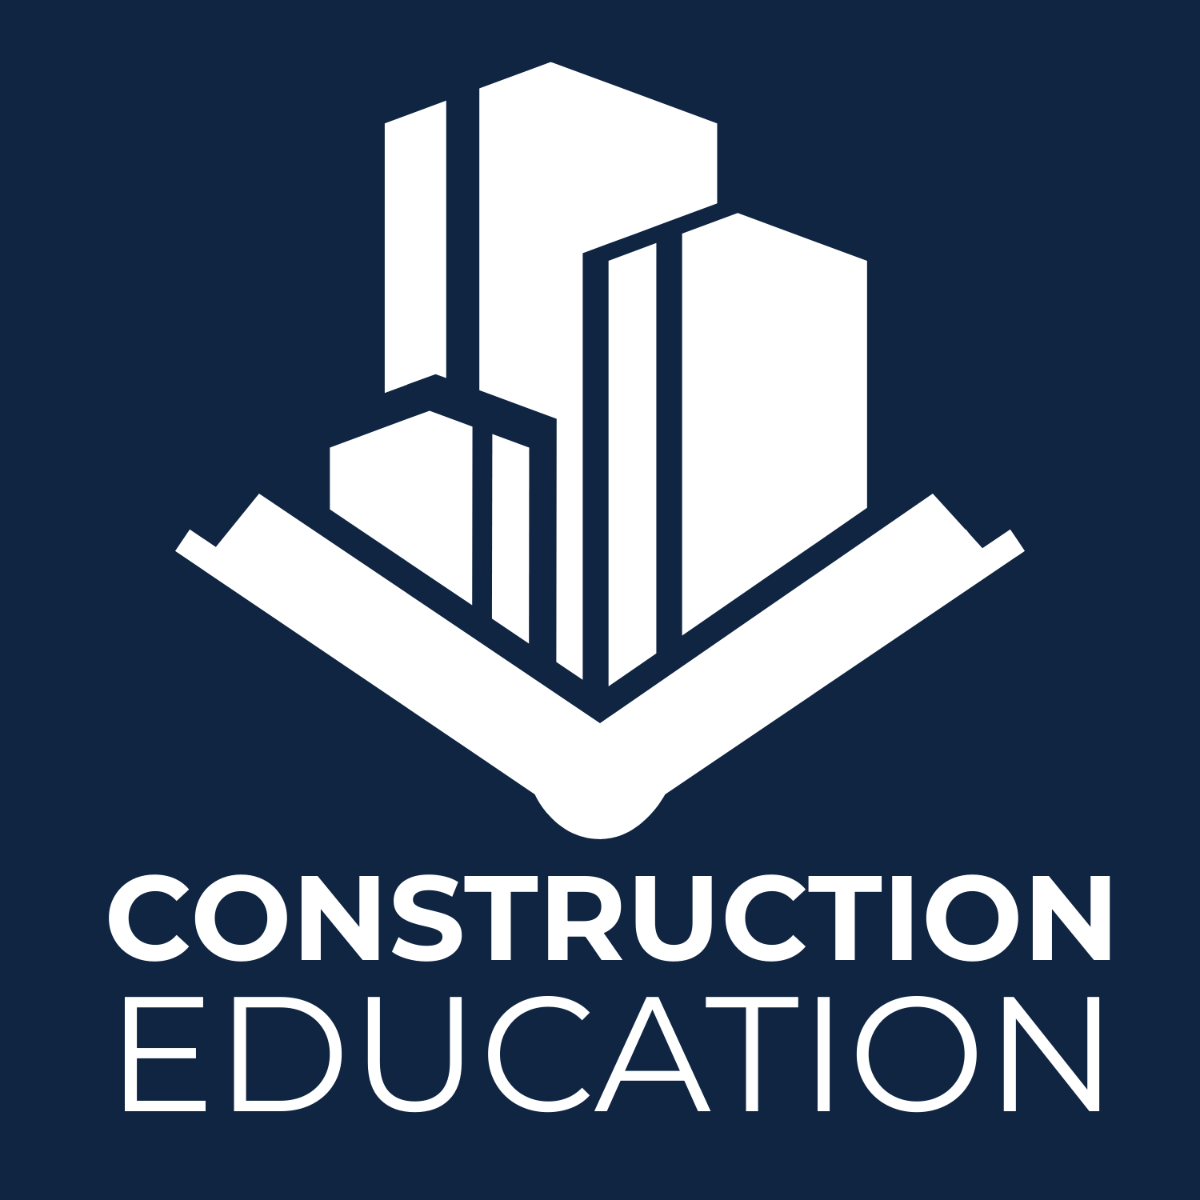 Construction Education Logo Template